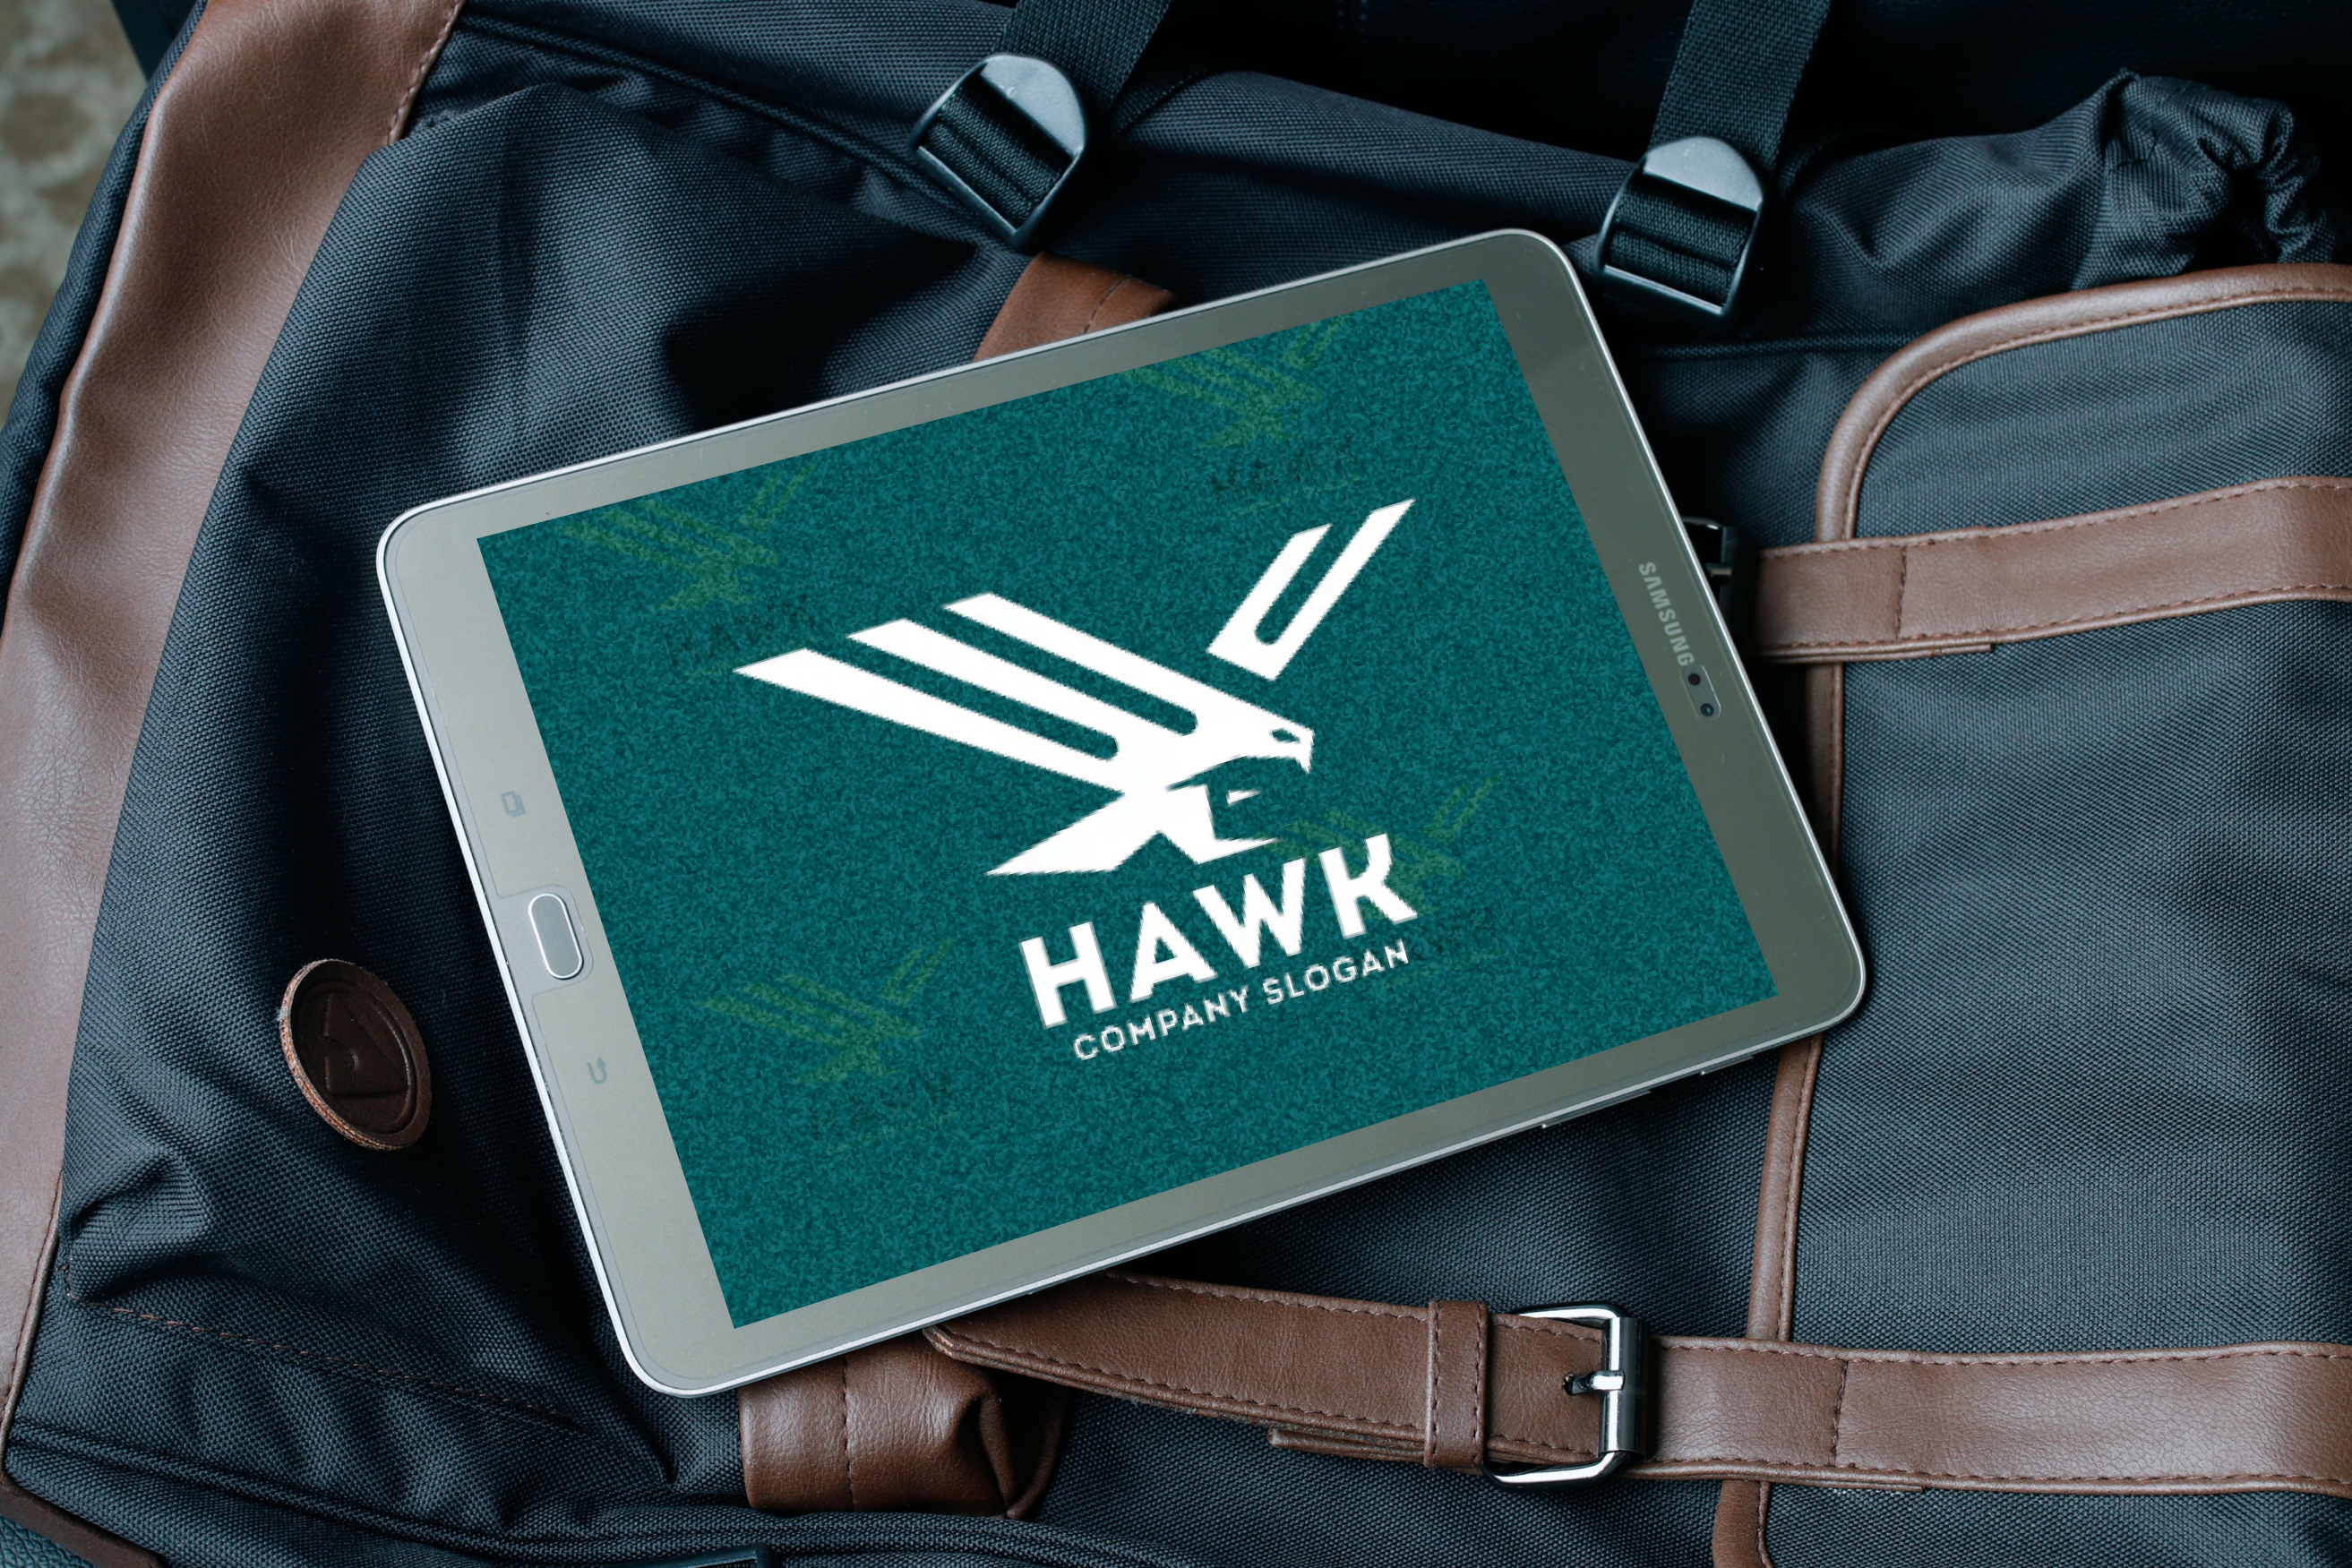 Wing hawk concept design on tablet.